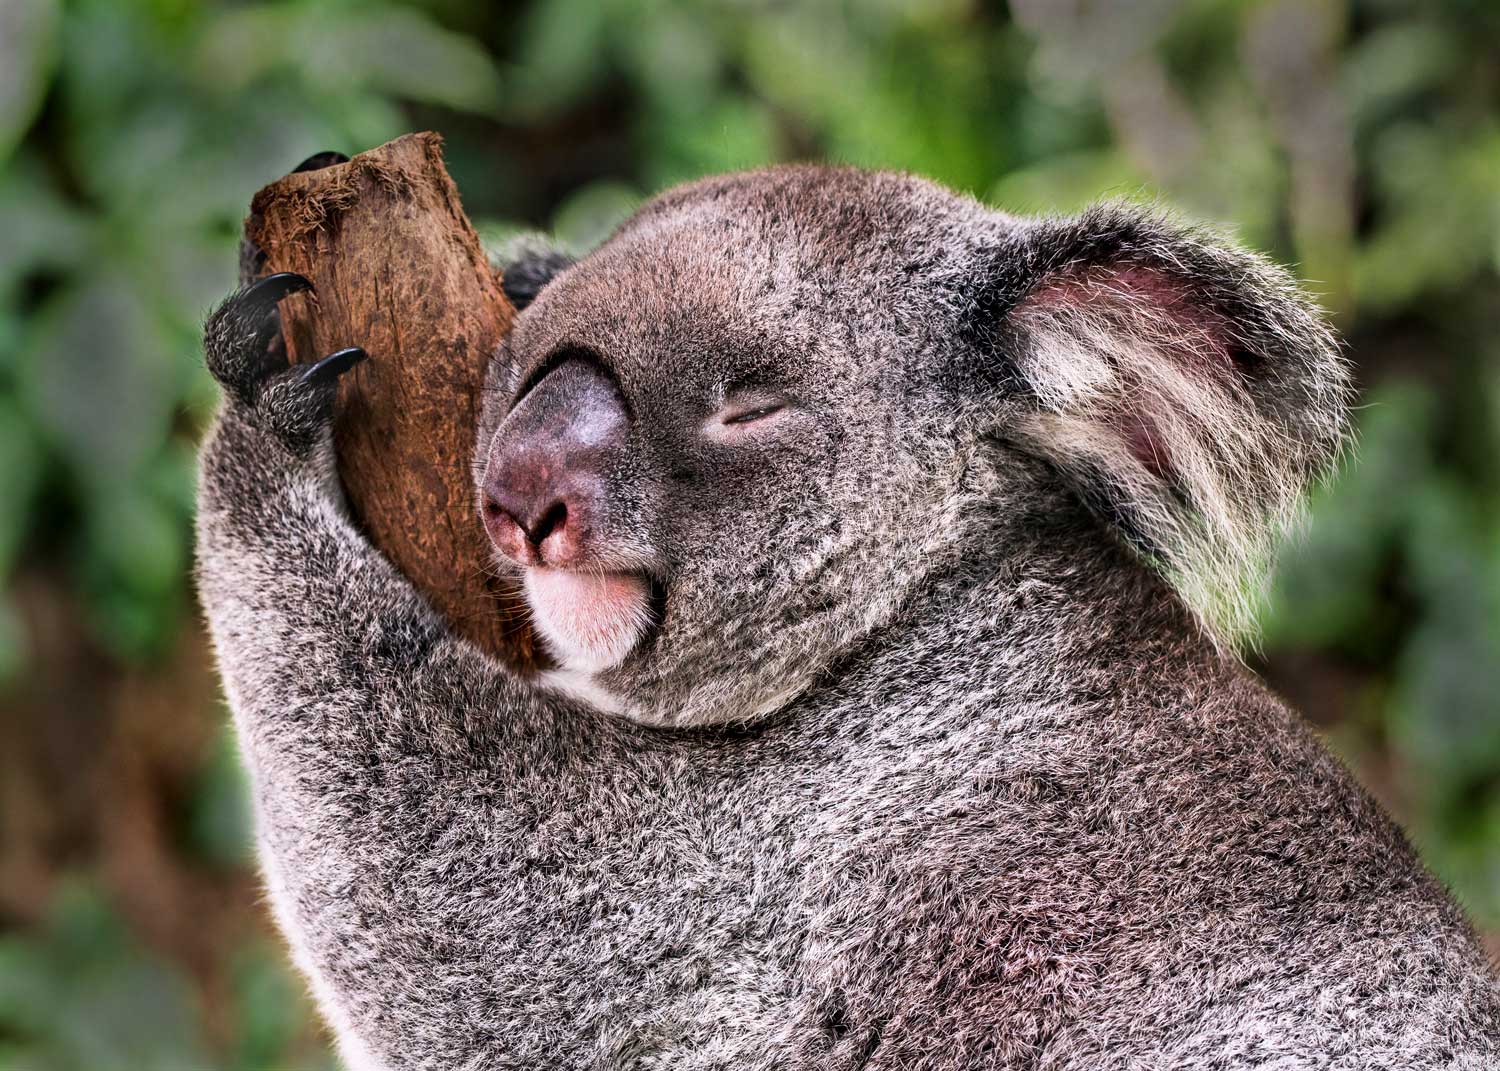 koala in Australia for wires wildlife protection